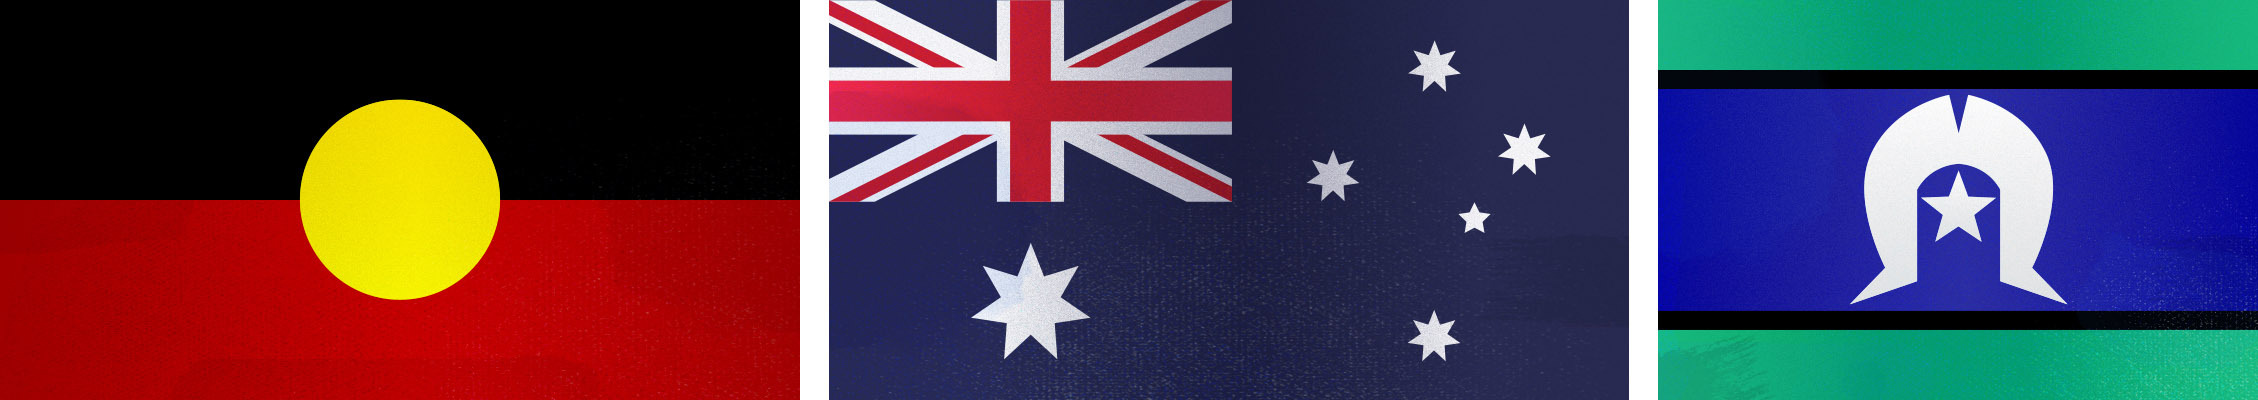 Aboriginal, Australian, and Torres Strait Islander flags